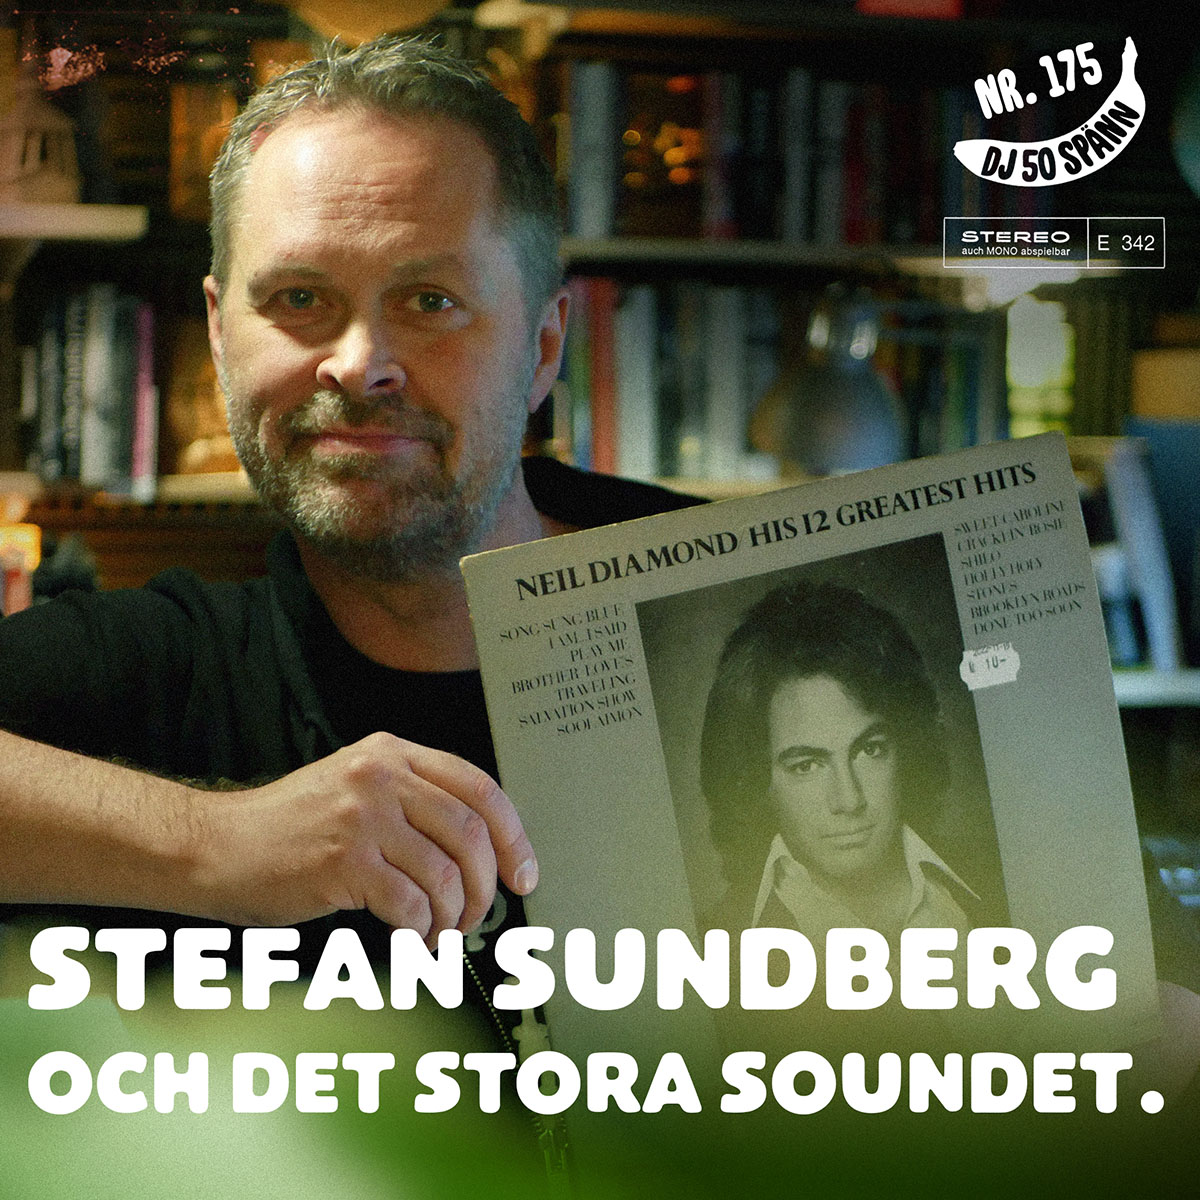 Det stora soundet och Stefan Sundberg (of SkivSnack fame)